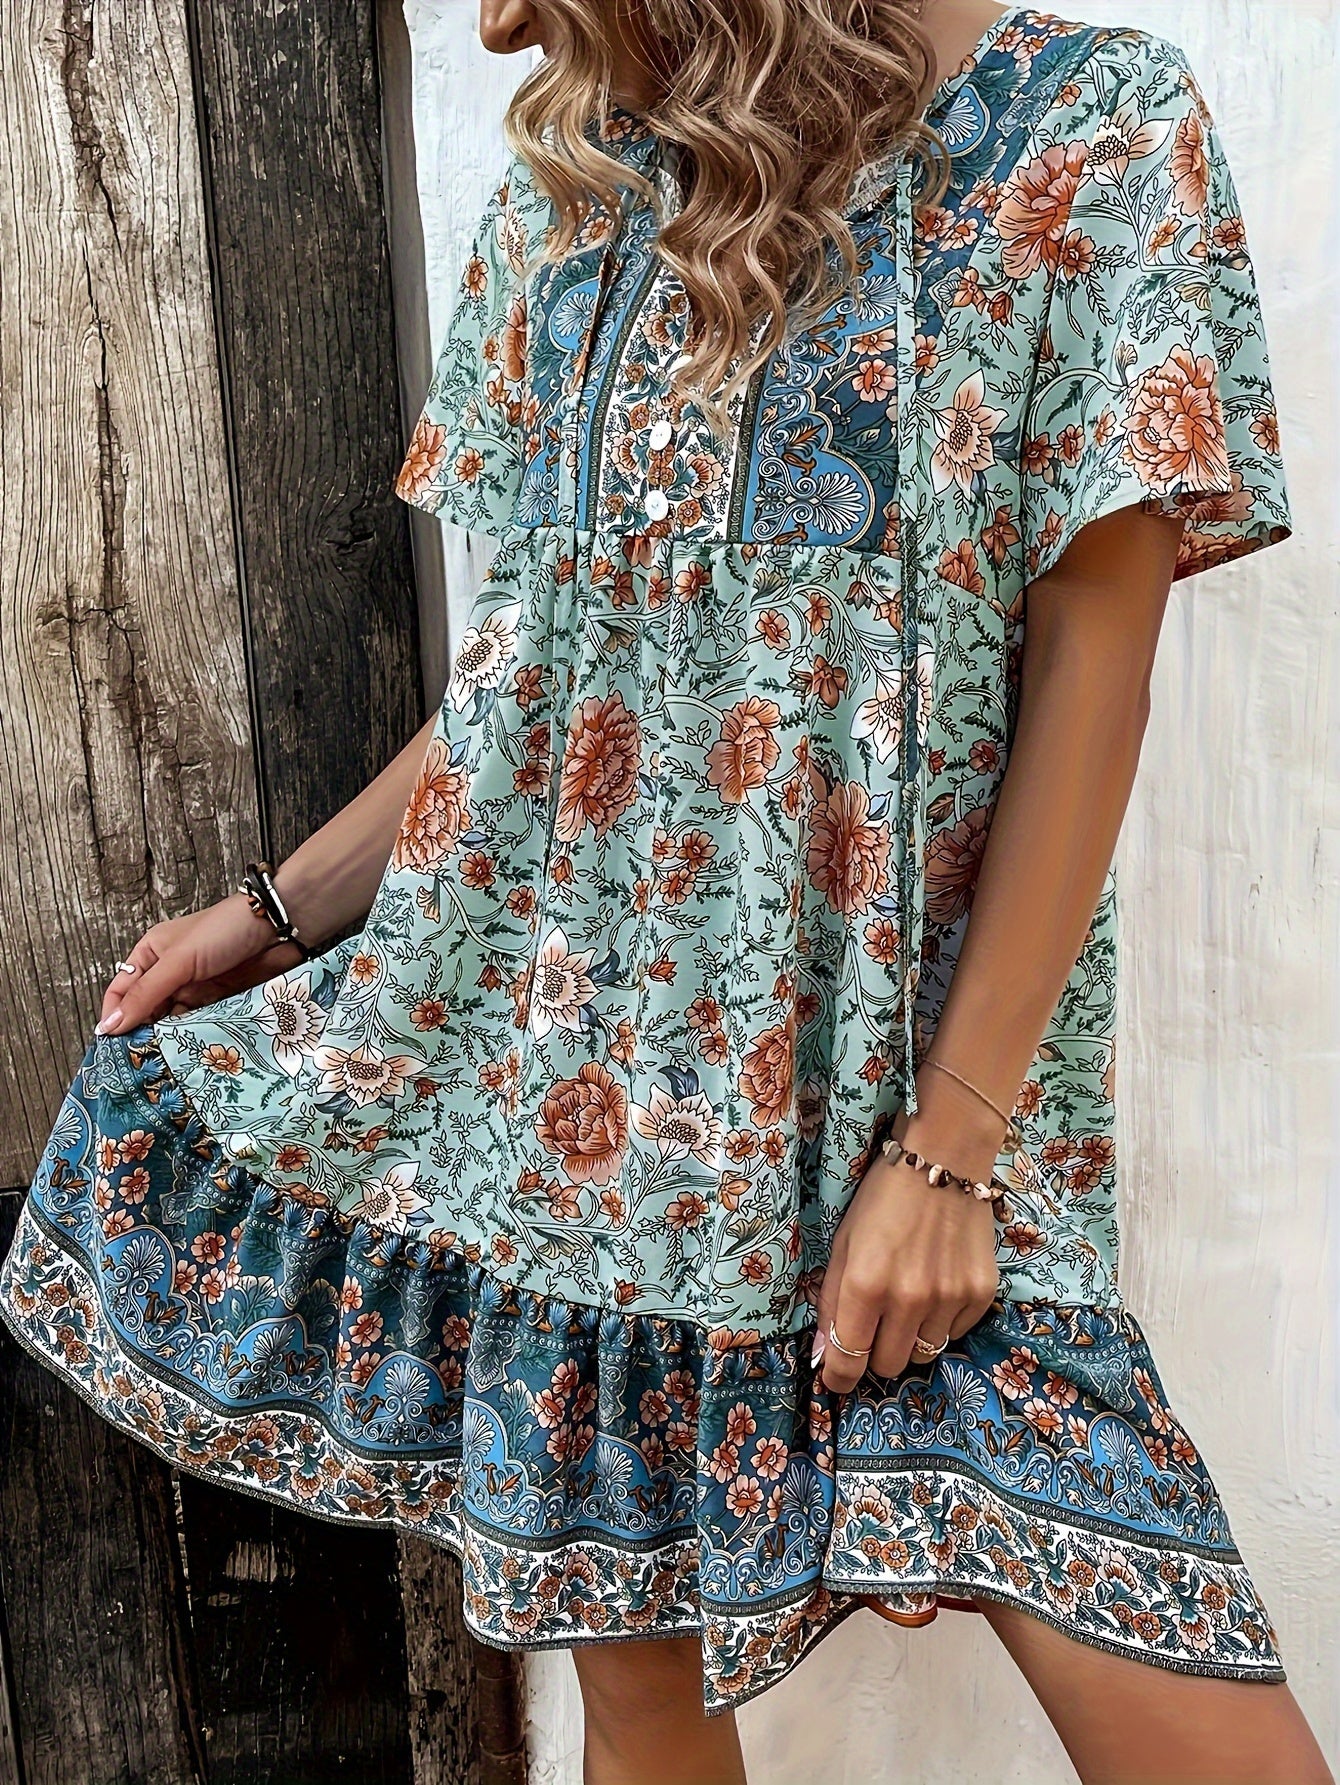 Paris Floral Print Bohemian Dress, Casual Summer Dress, Short Sleeve Dress For Spring & Summer, Women's Clothing